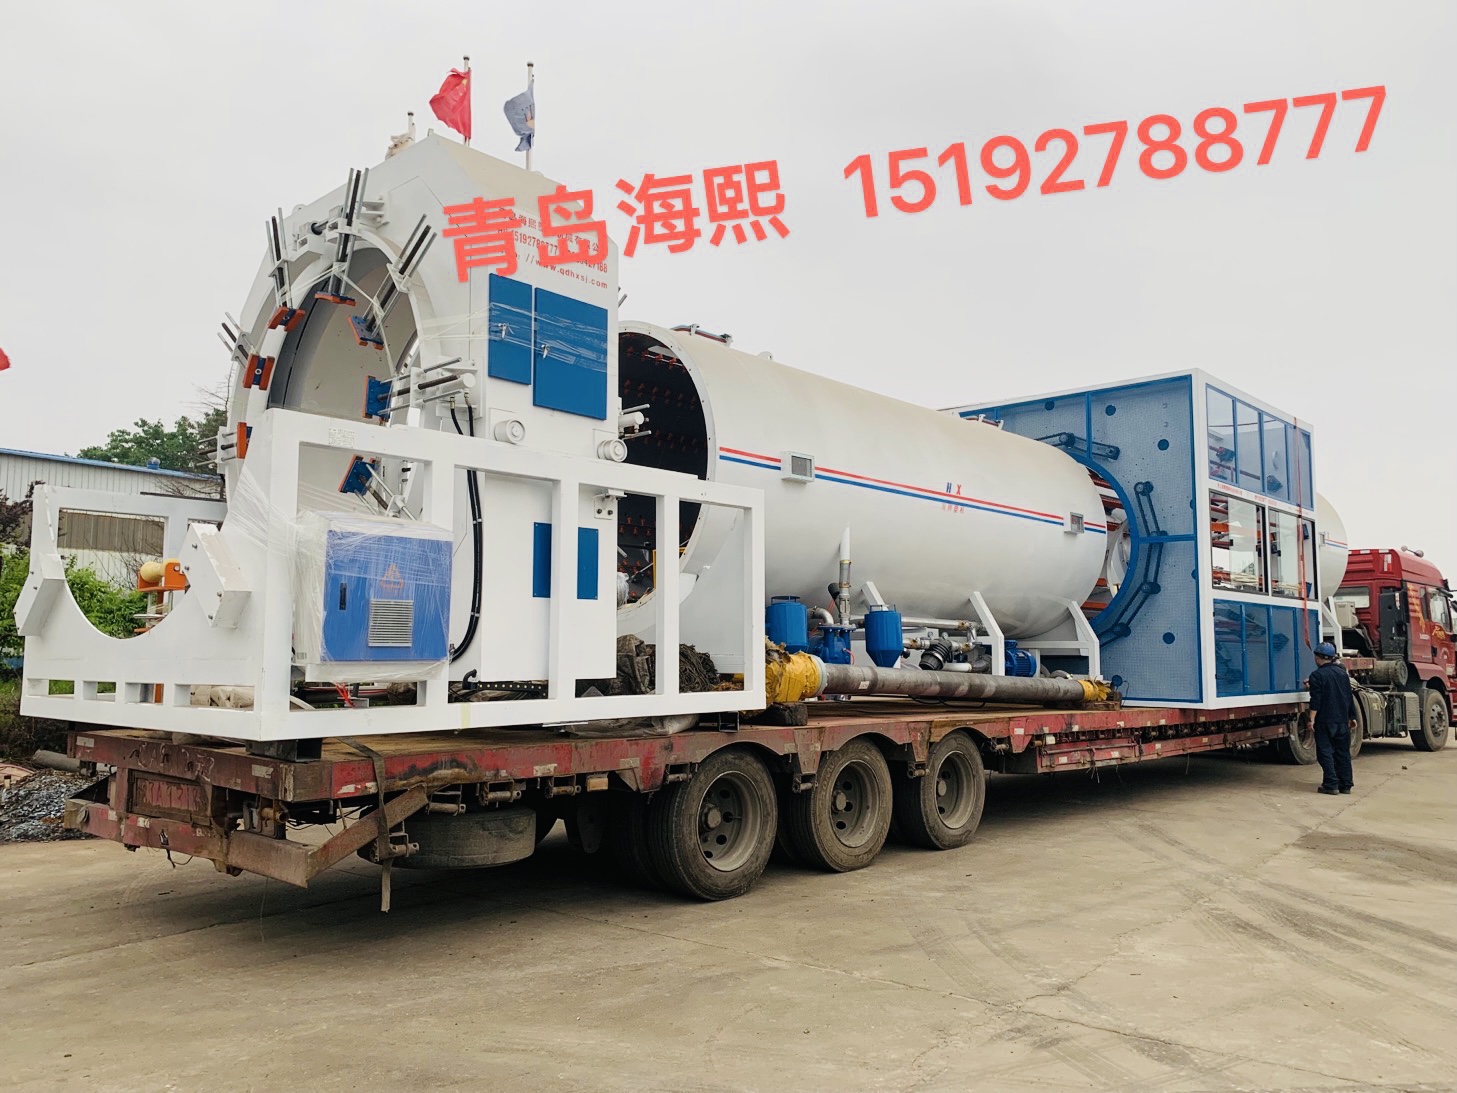 Hebei Qianhai Pipeline Manufacturing Co., LTD ----